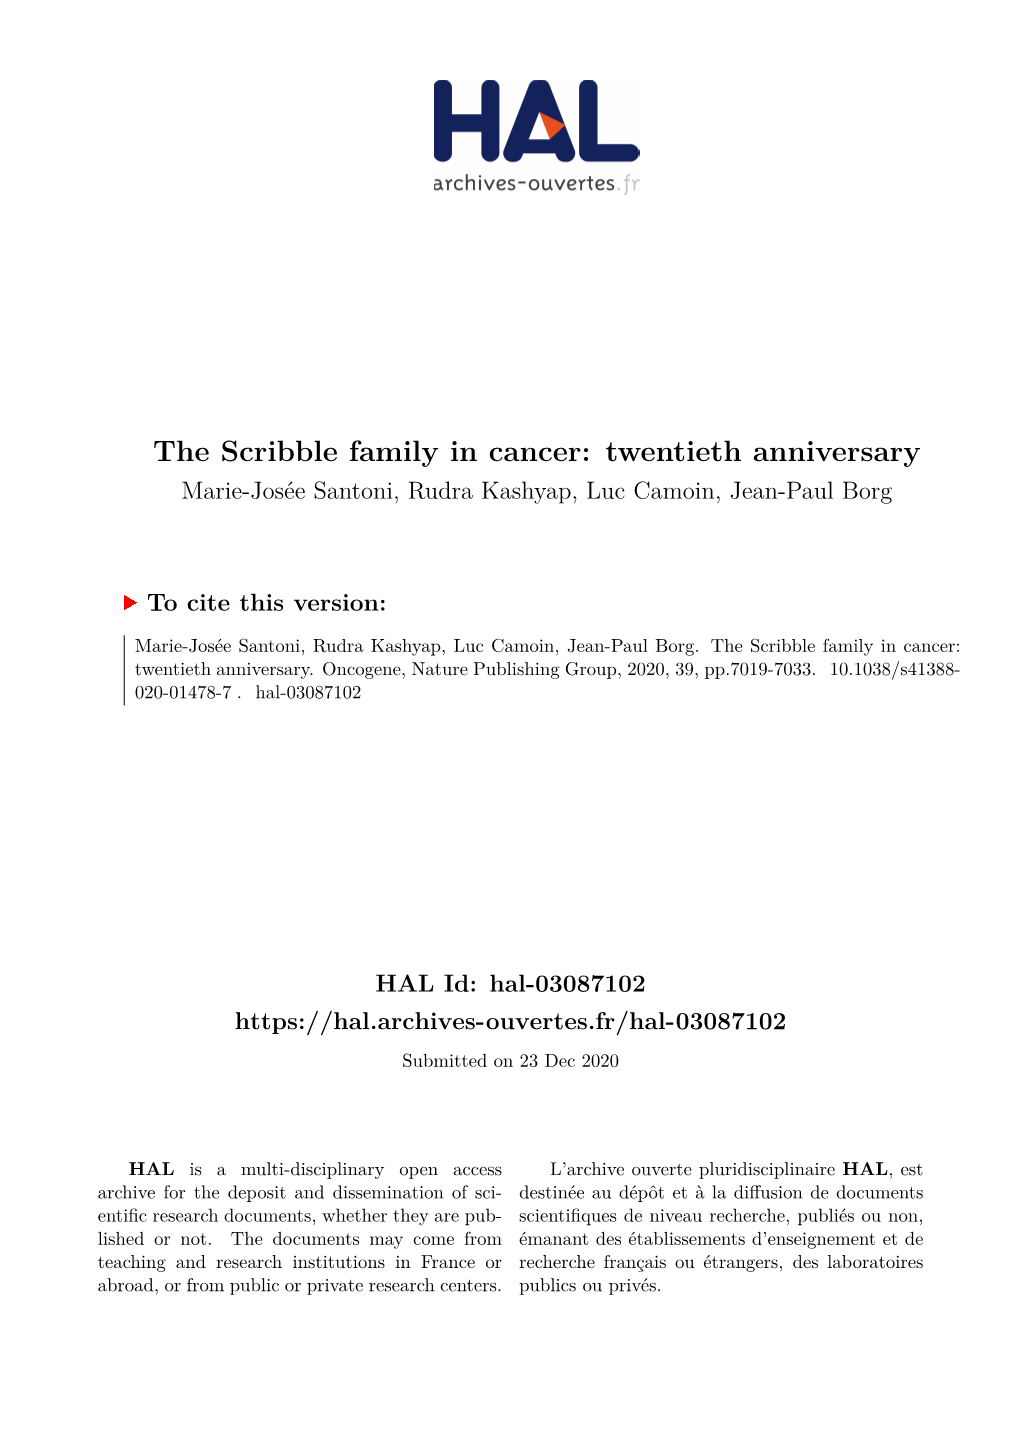 The Scribble Family in Cancer: Twentieth Anniversary Marie-Josée Santoni, Rudra Kashyap, Luc Camoin, Jean-Paul Borg